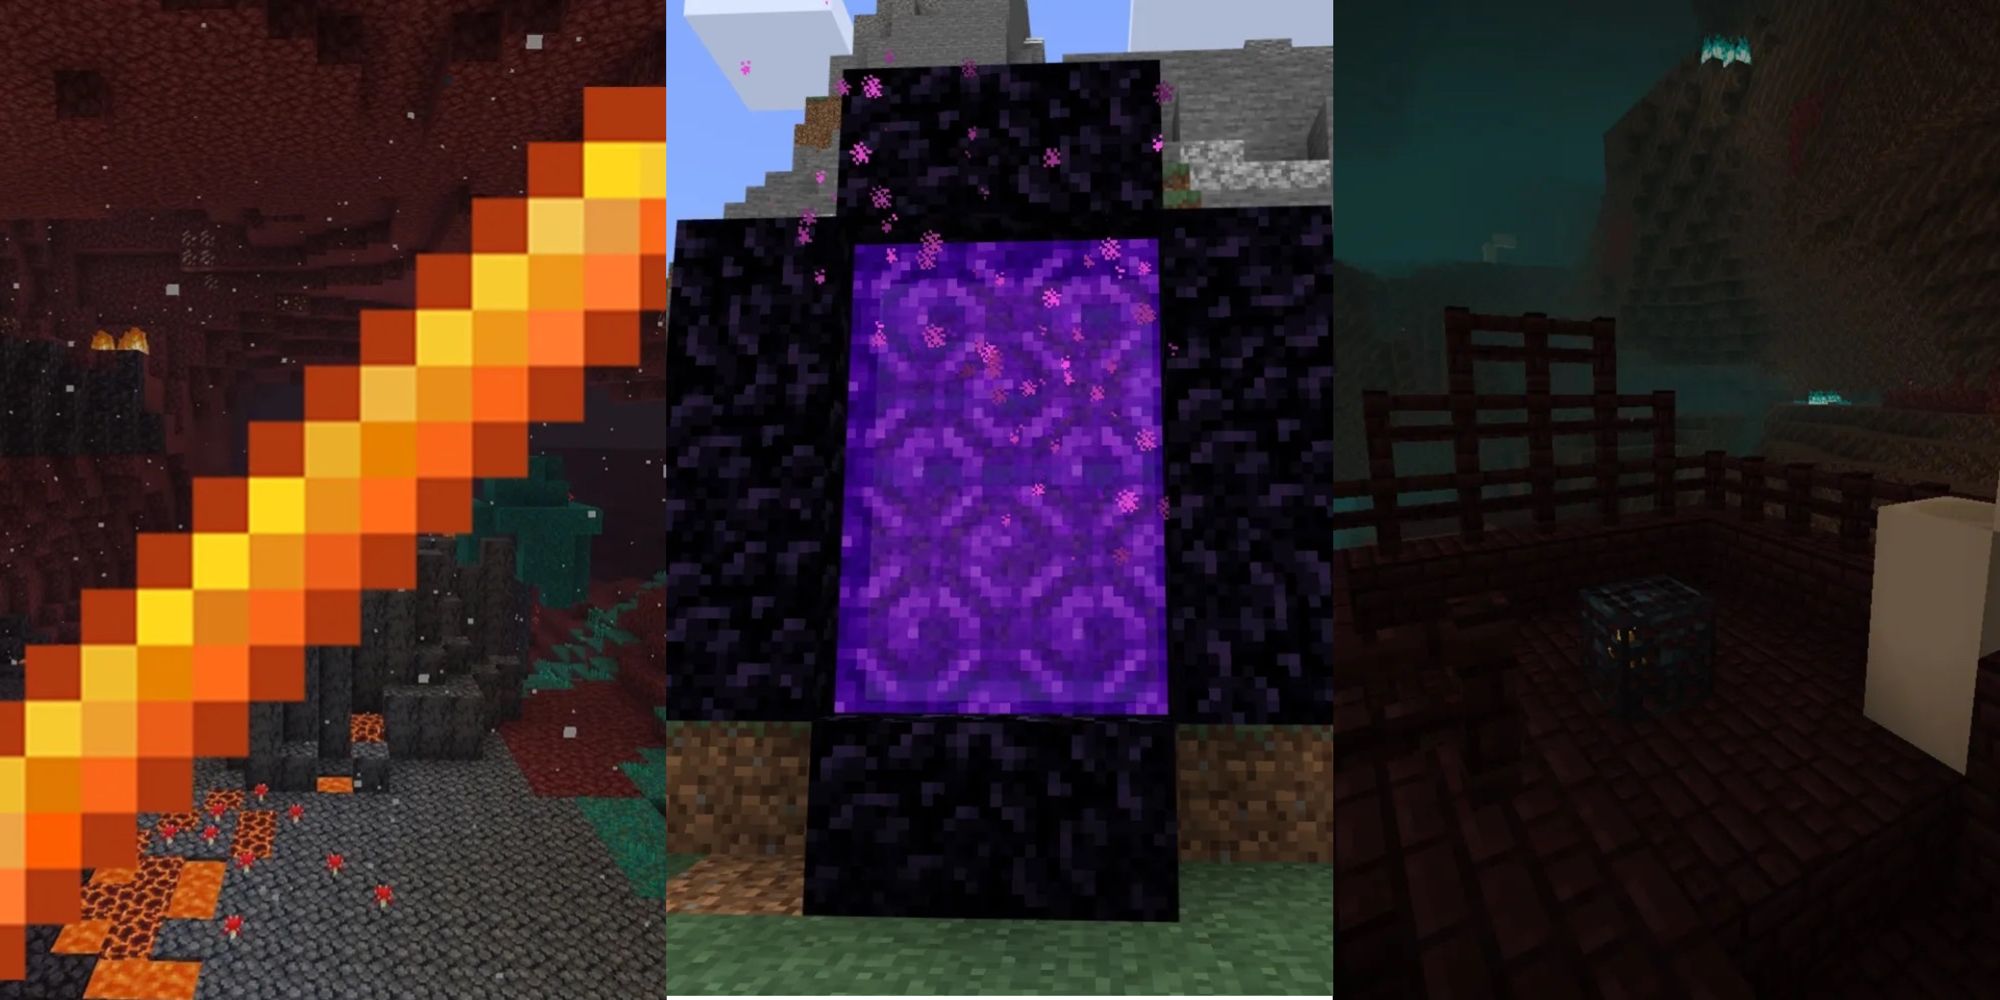 A split image with a Minecraft blaze rod, Nether Portal, and blaze spawner